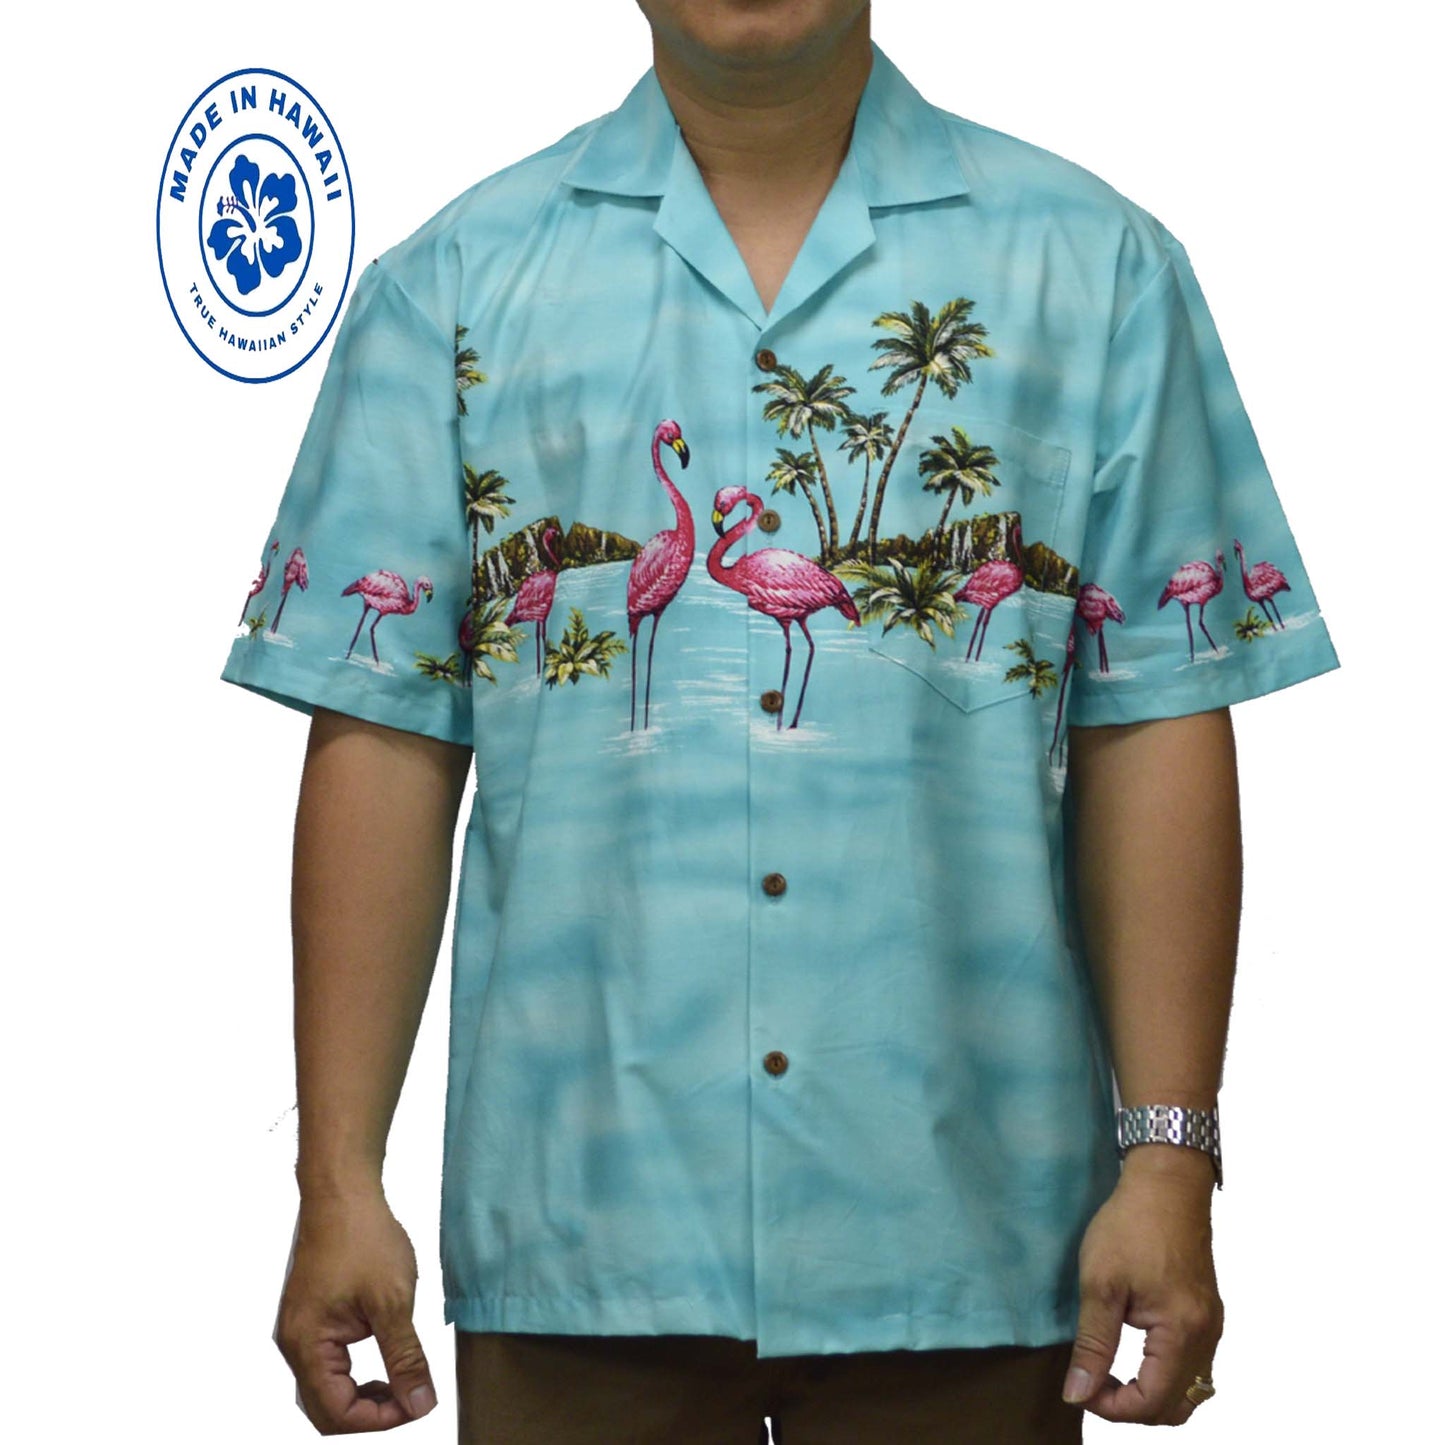 Ky's Hawaiian Cotton Shirt Pink Flamingo-Green